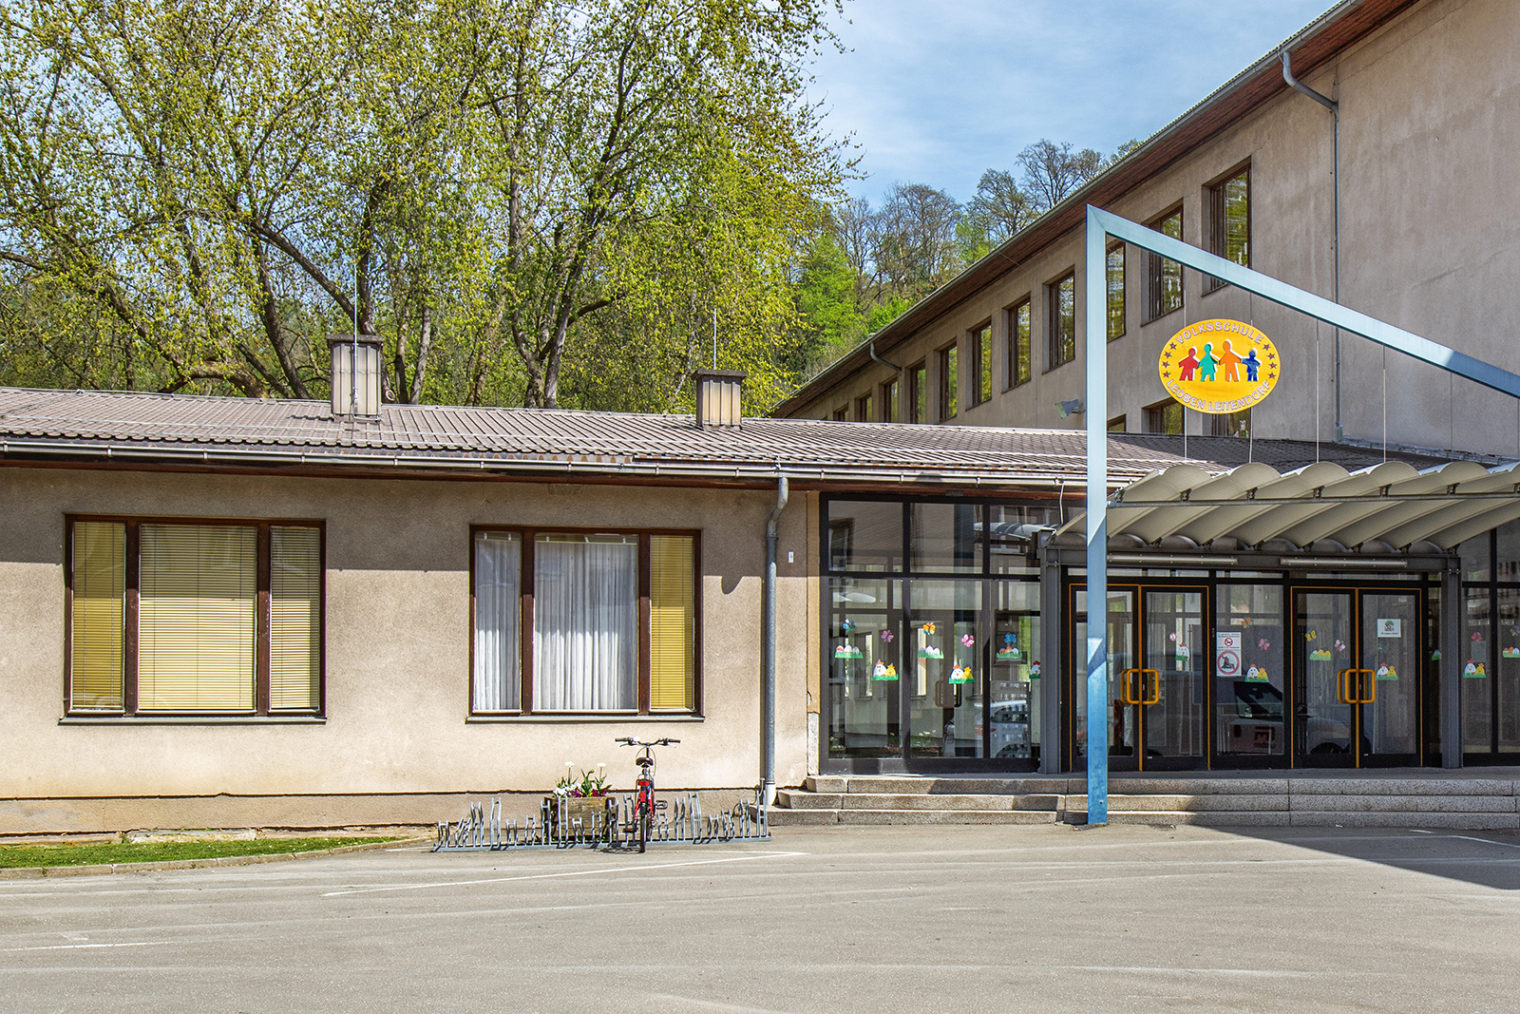 Primary school Leoben-Leitendorf